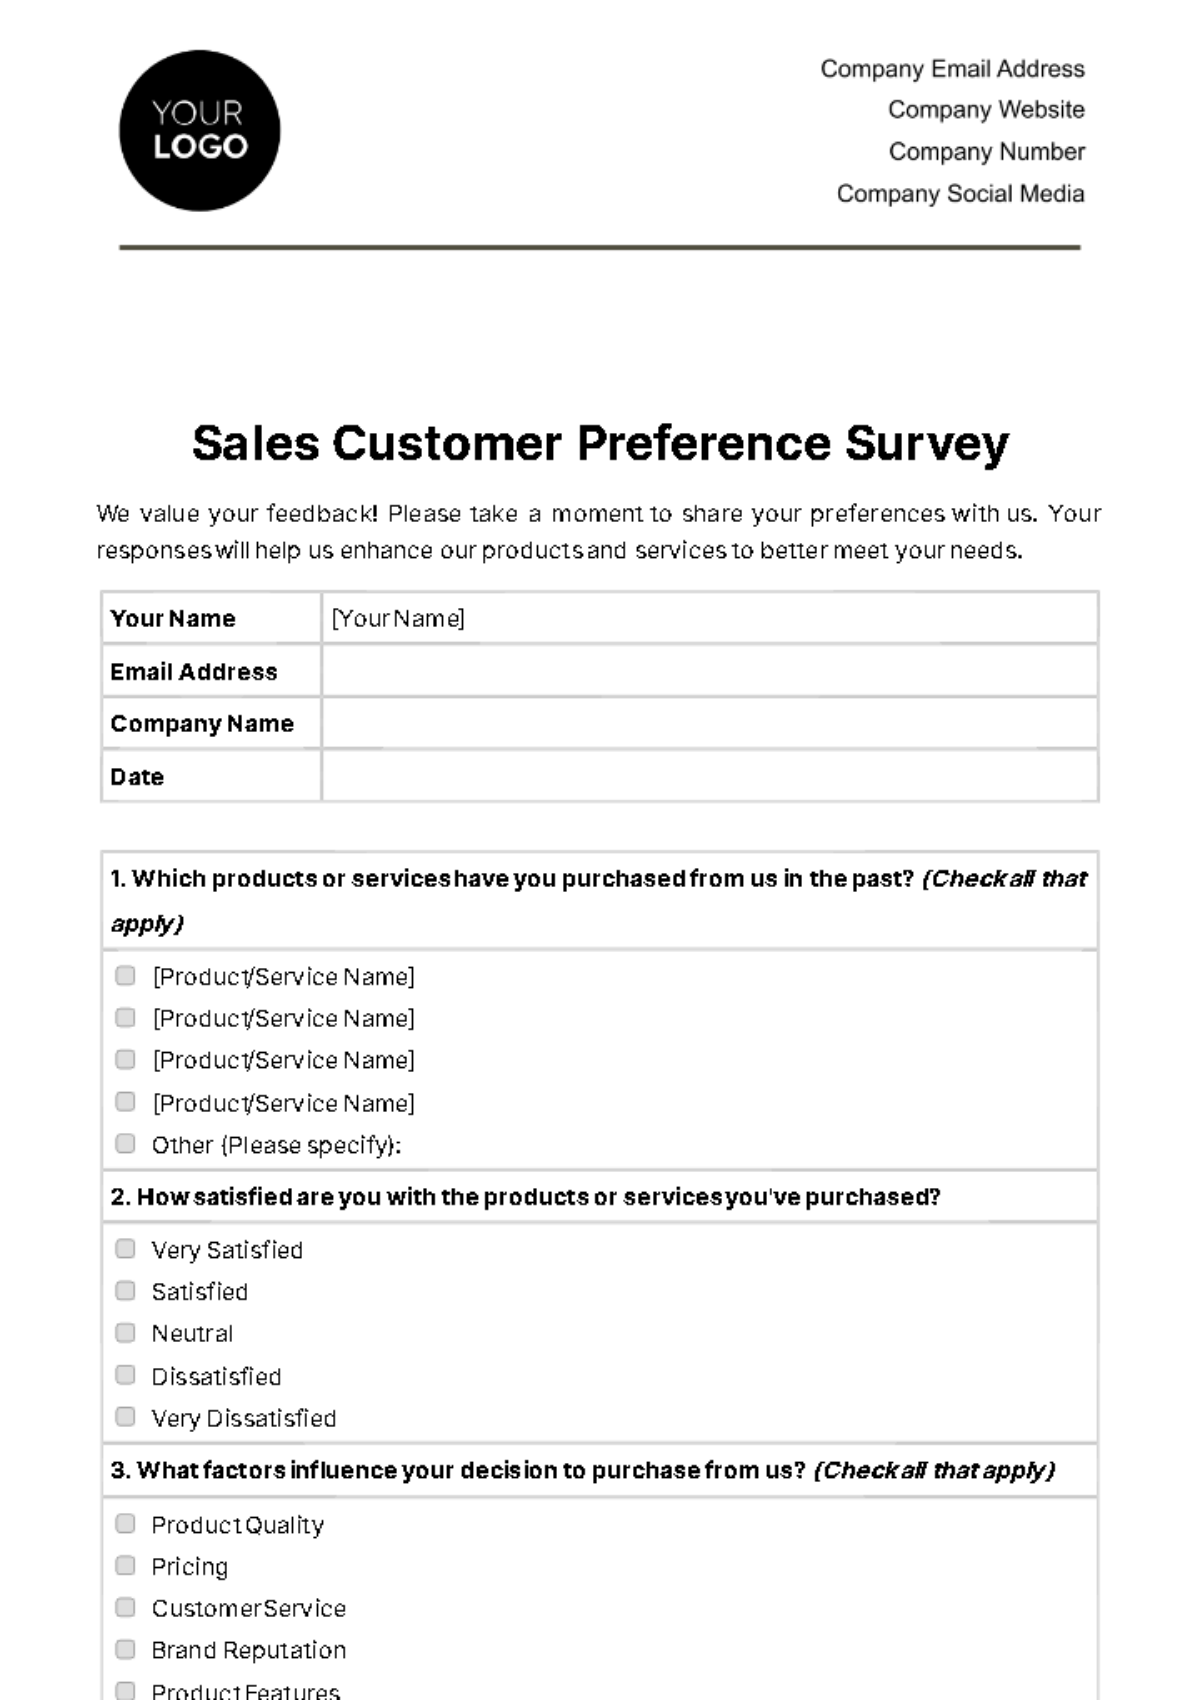 Sales Customer Preference Survey Template